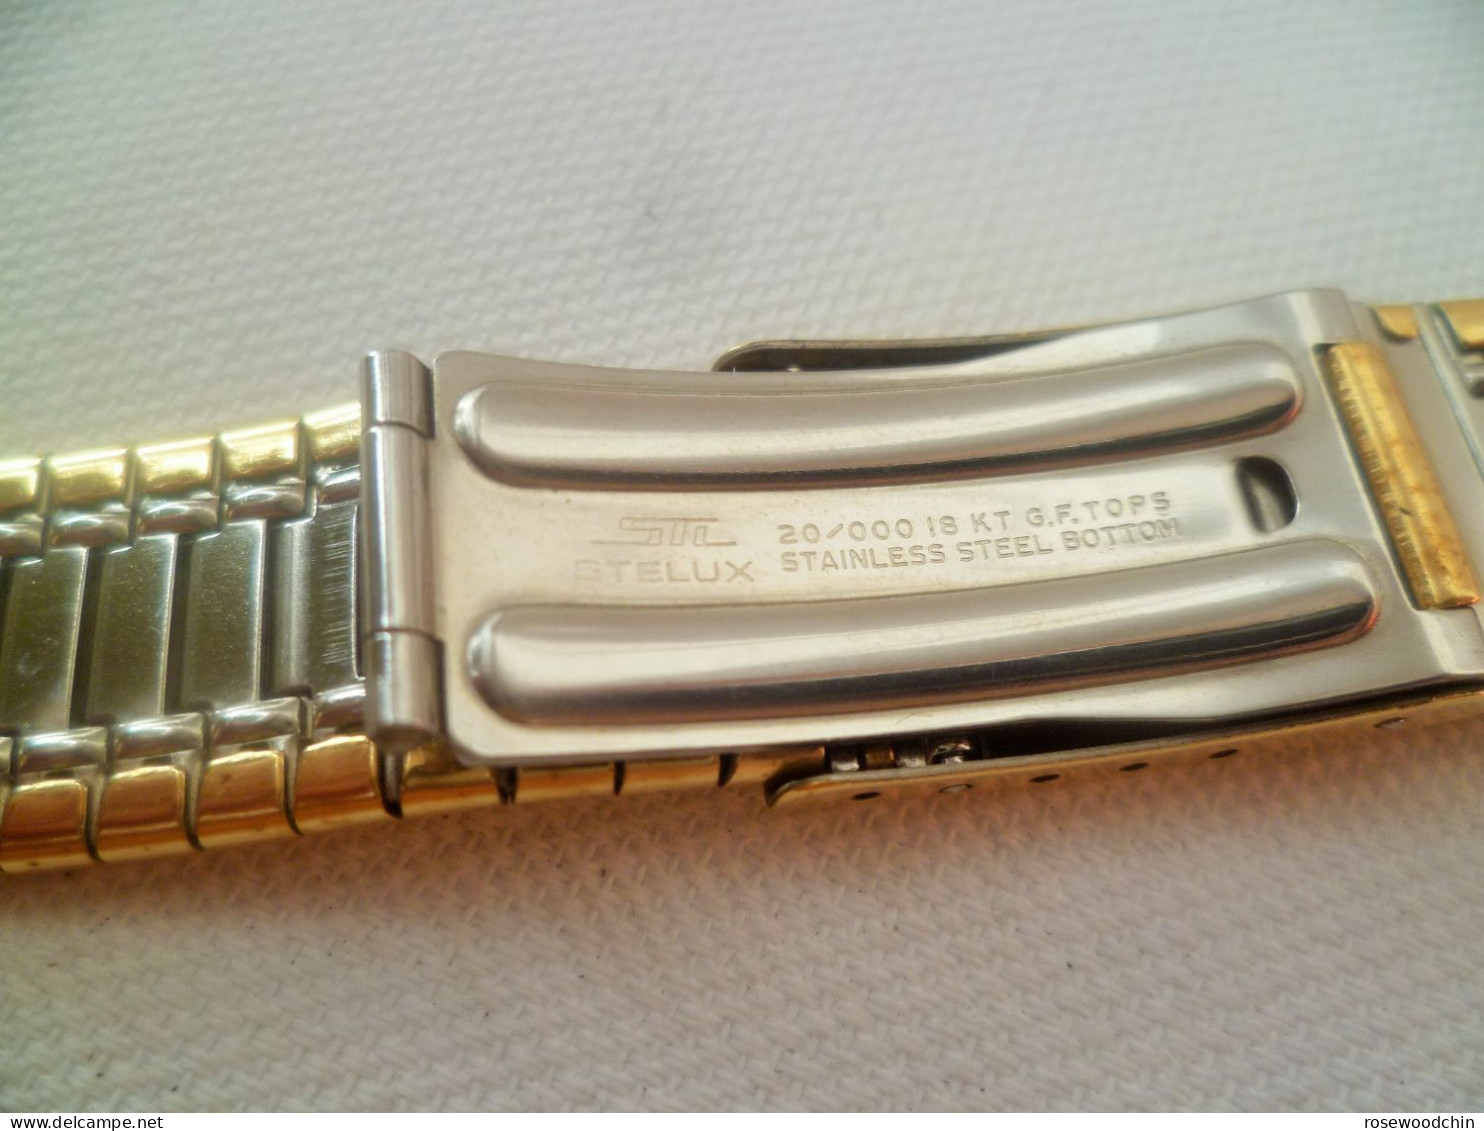 Vintage ! 50s' Seiko STL Stelux 20/000.18 KT G.F. Tops S/S Bottom watch bracelet band 16mm (#28)